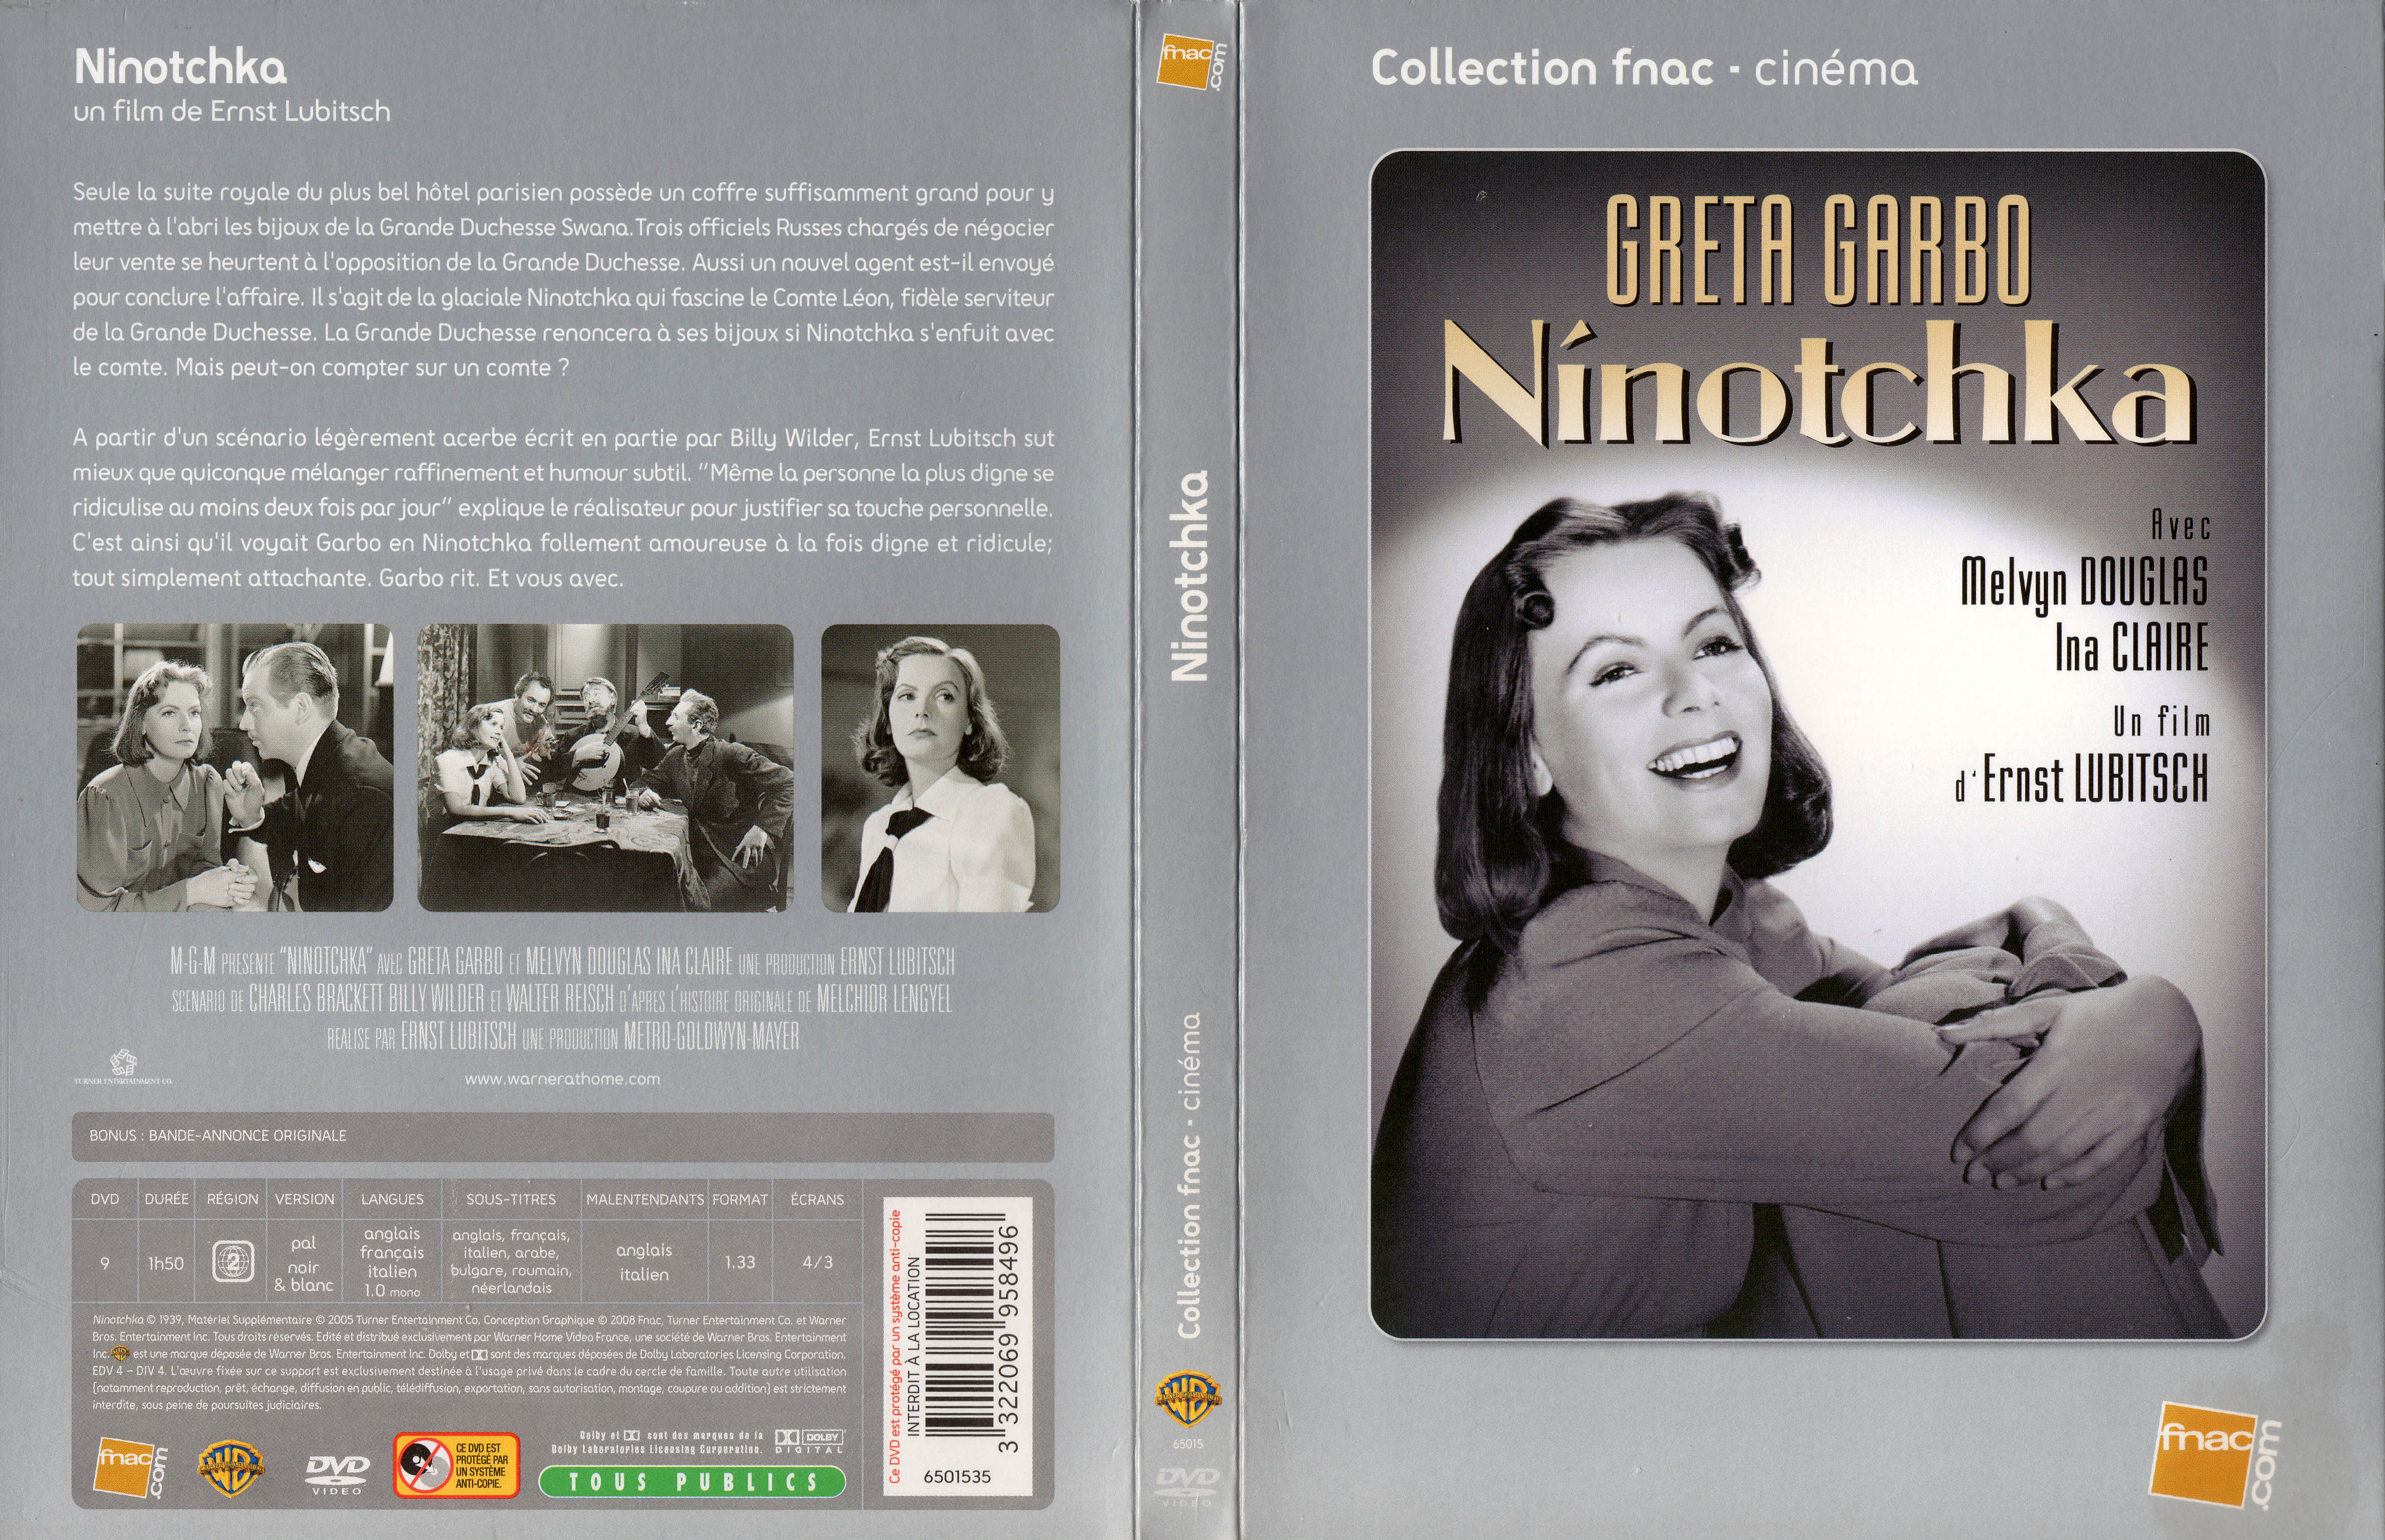 Jaquette DVD Ninotchka